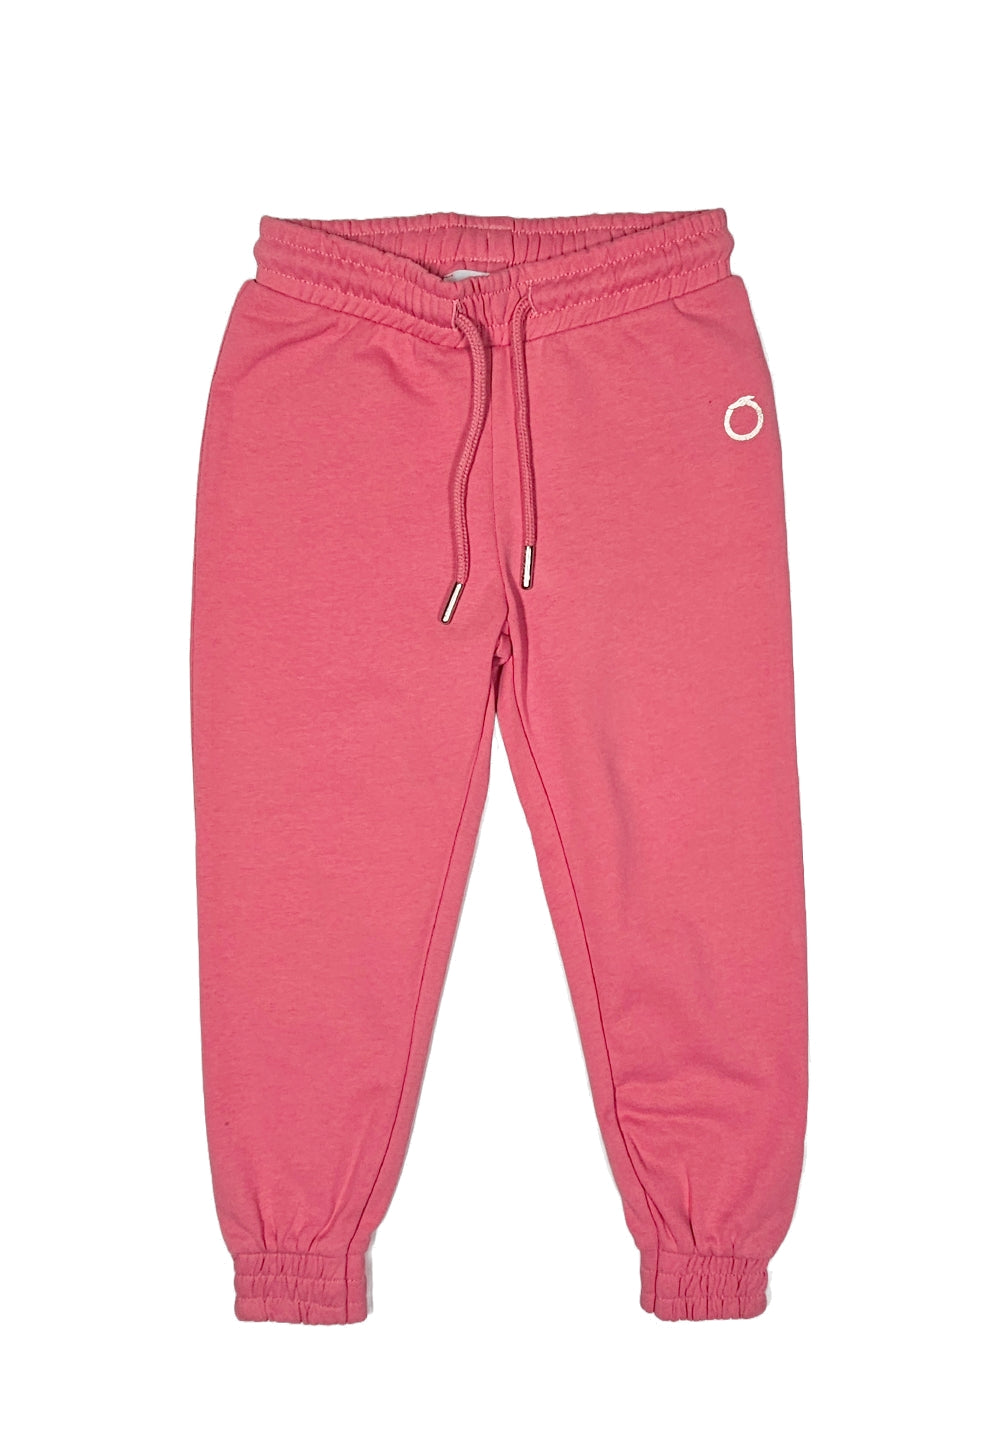 Pantalone felpa rosa per bambina - Primamoda kids